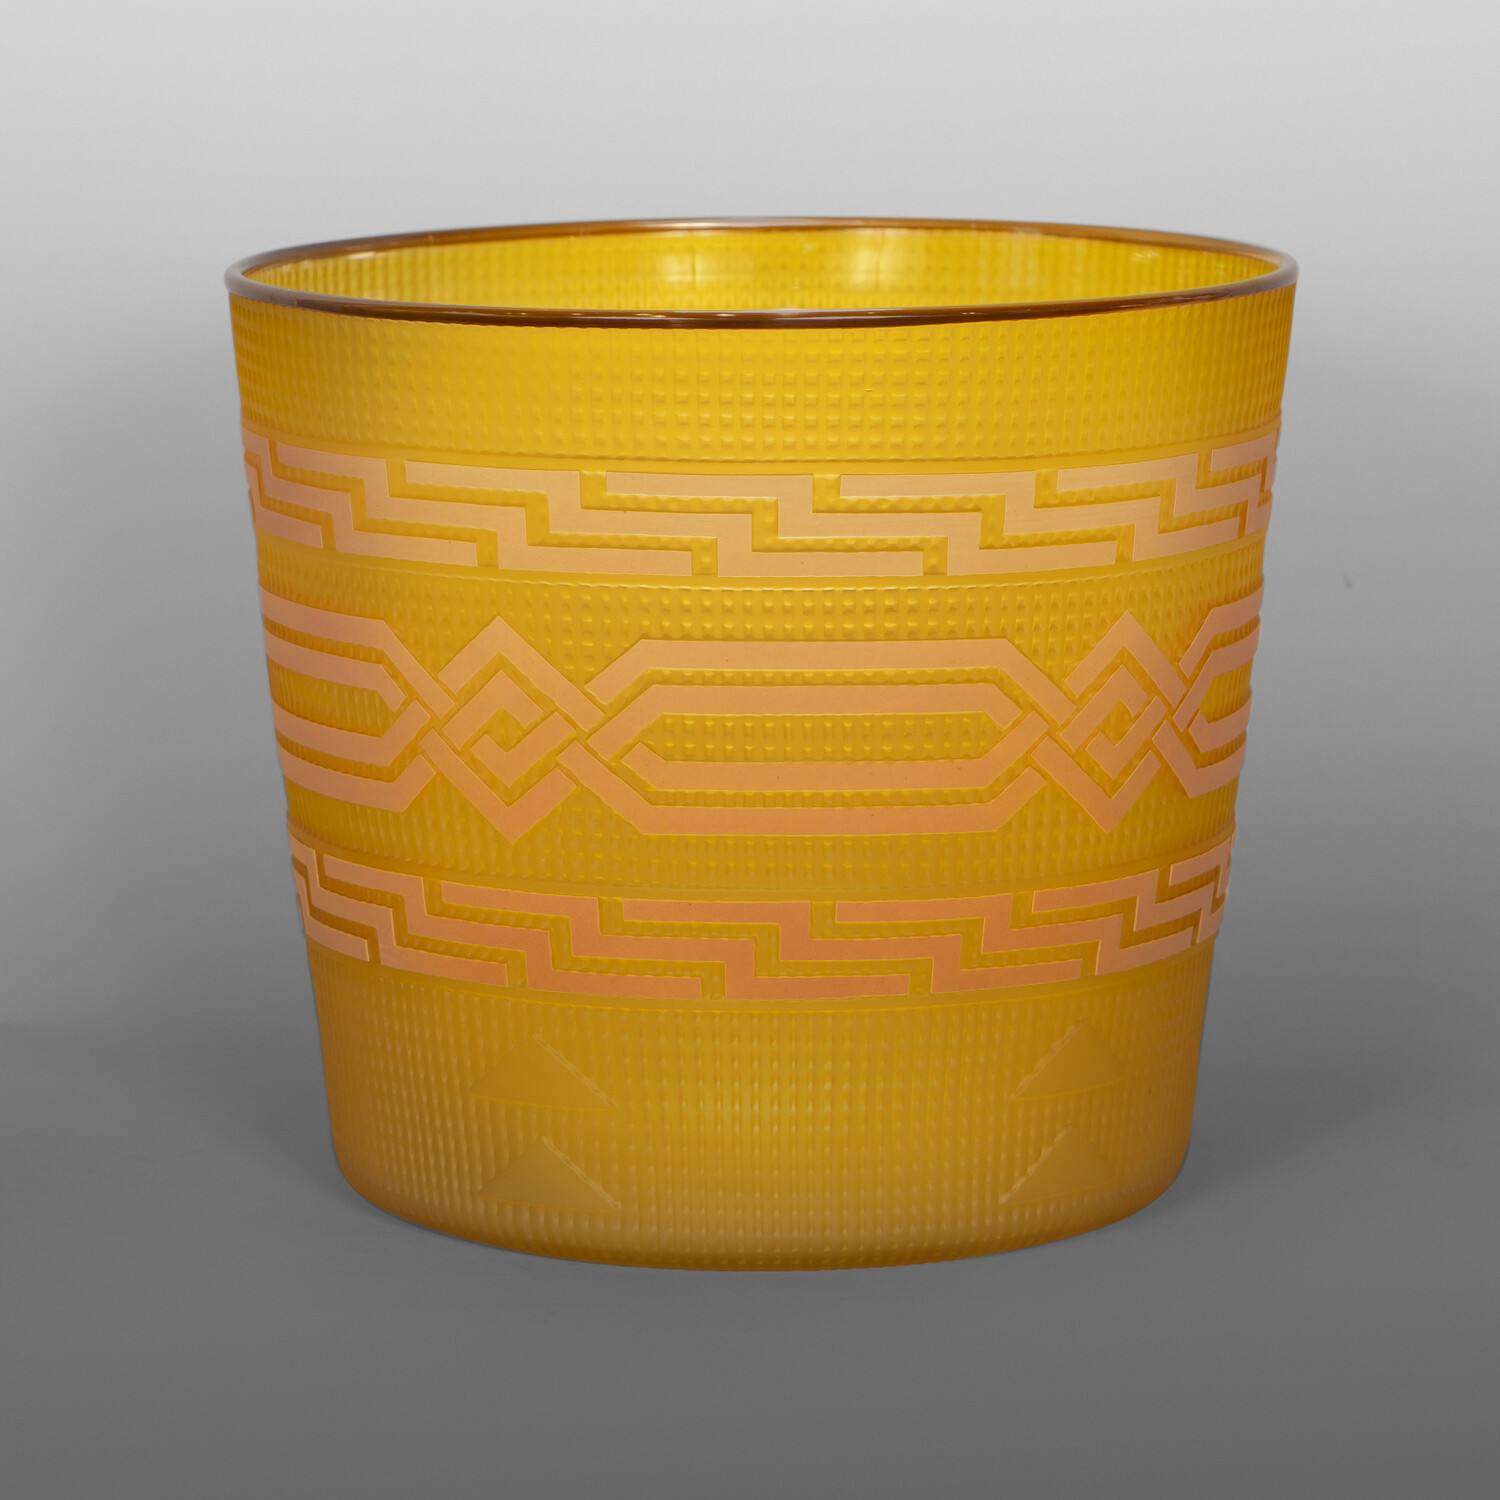 Amber & Gold Basket
Preston Singletary
Tlingit
Blown and sand-carved glass
10¼" x 8½"
$8000